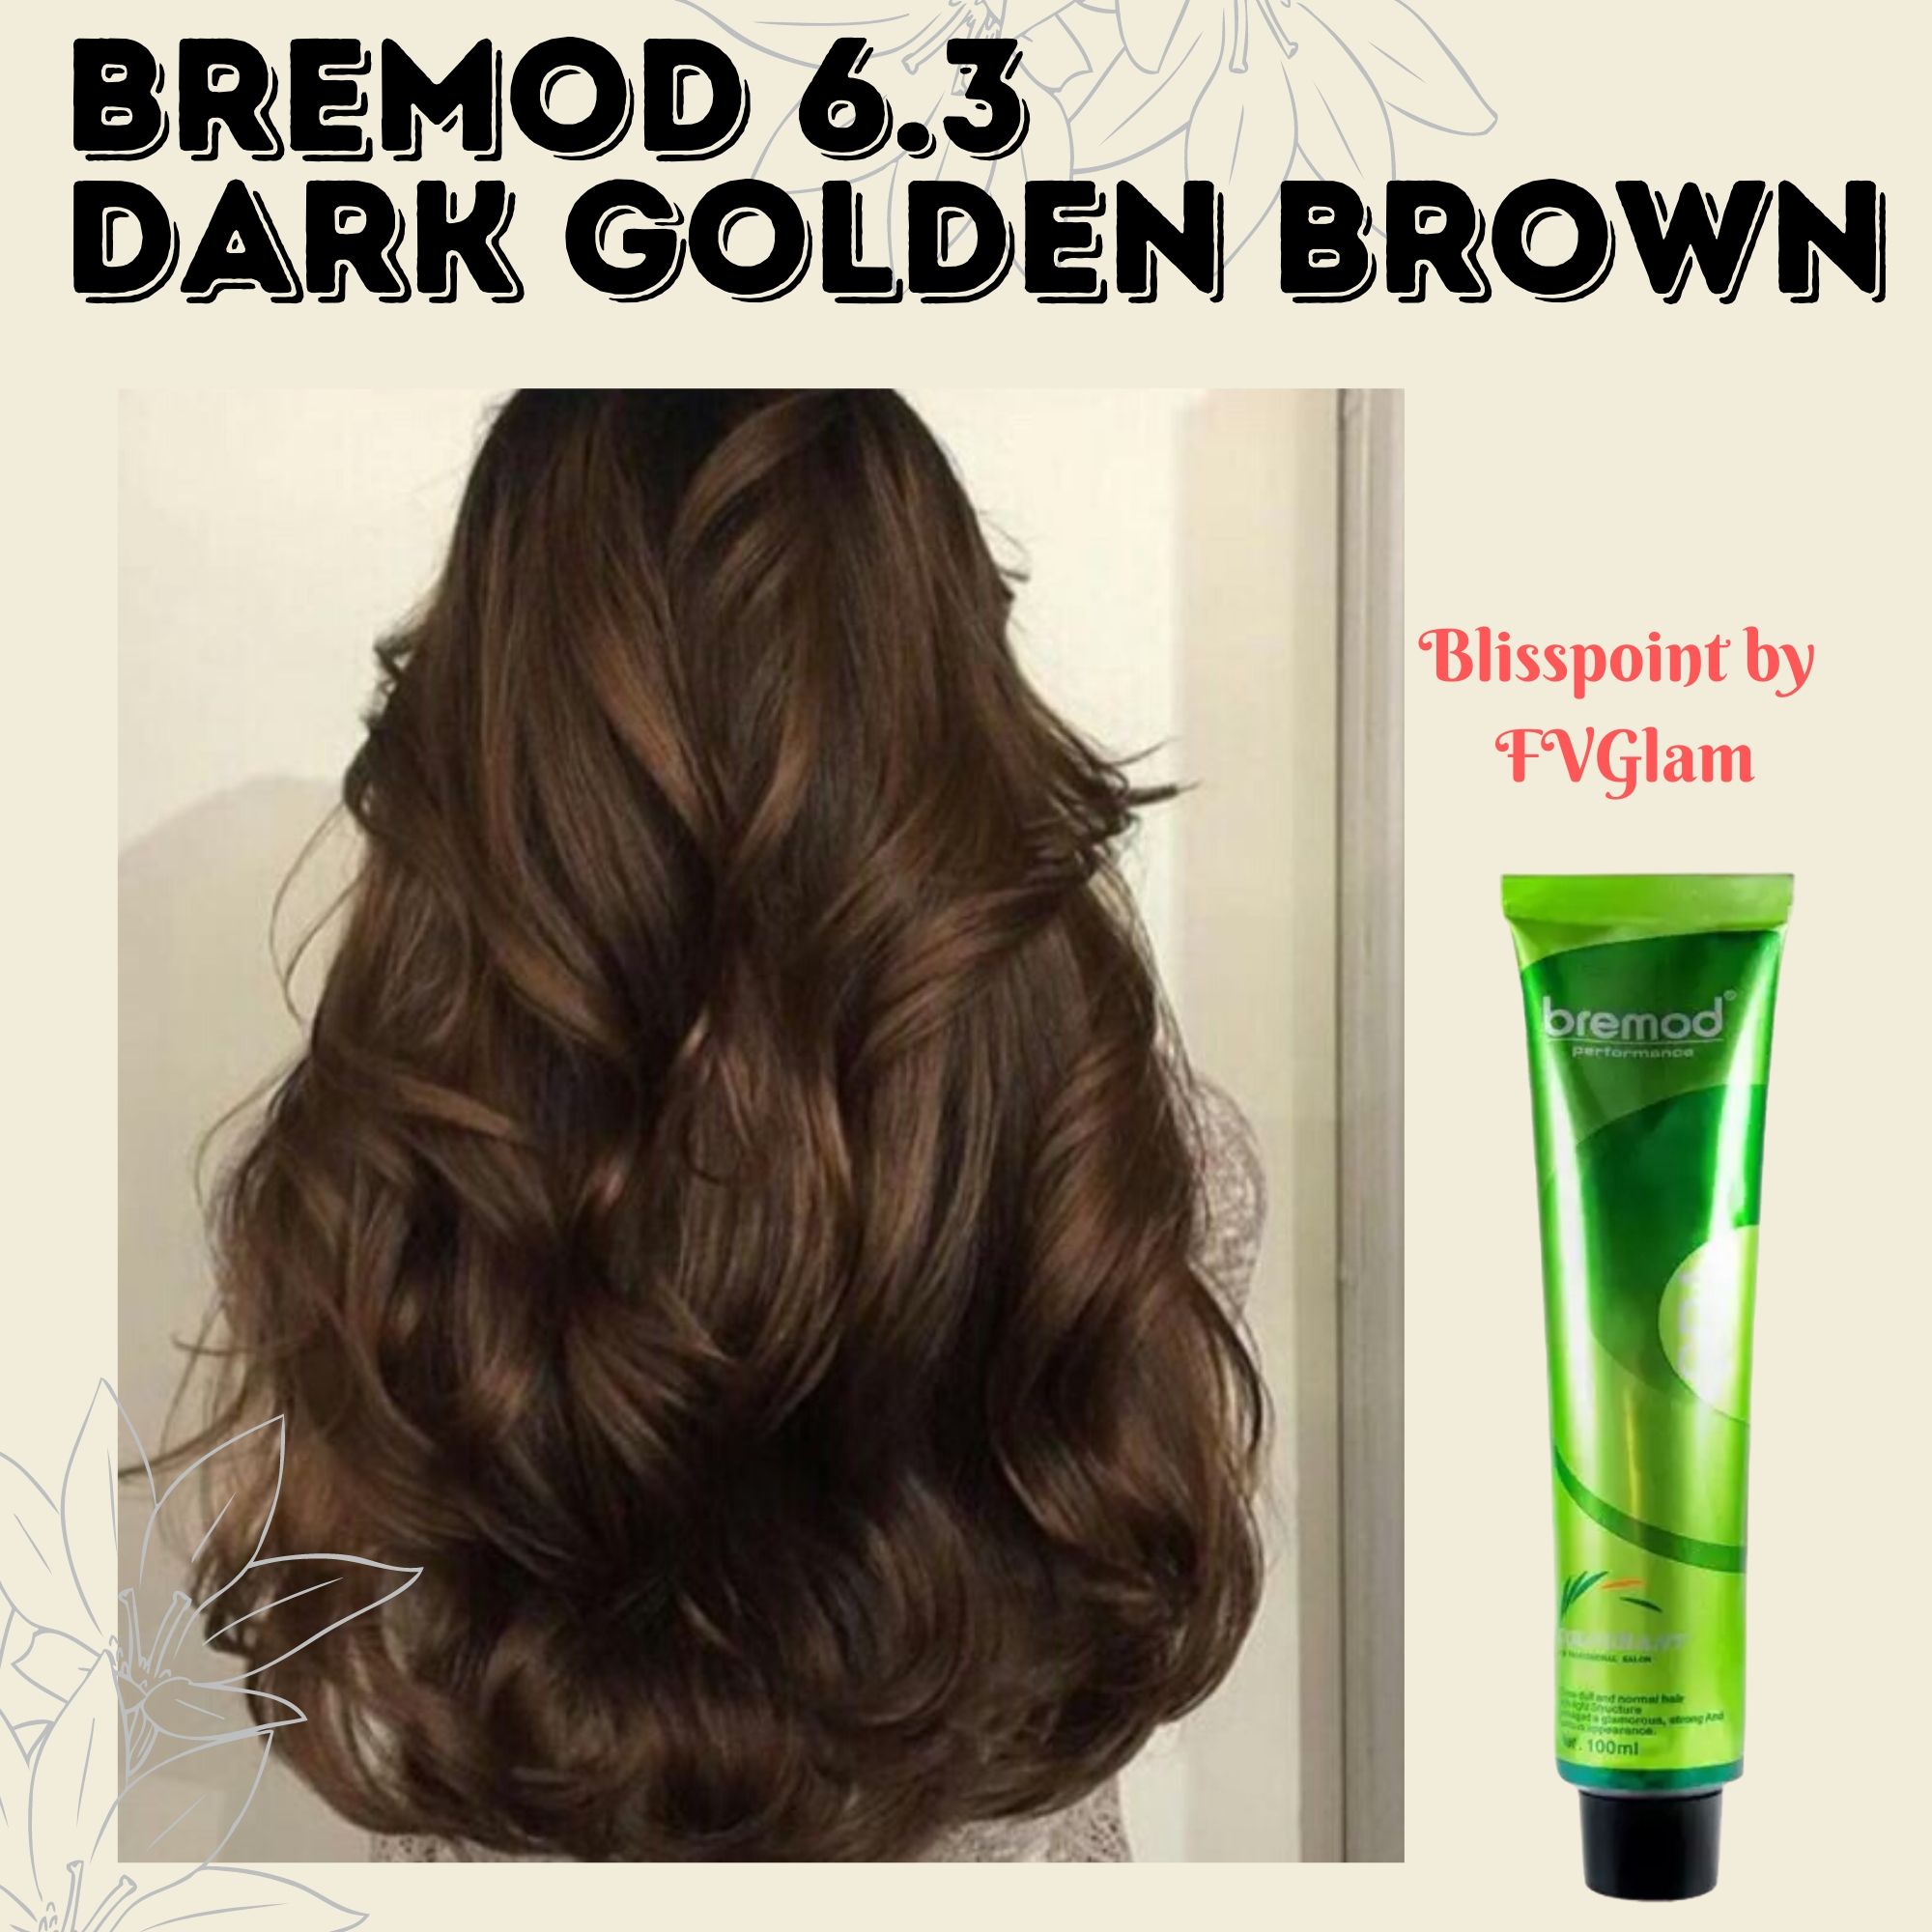 Revlon ColorSilk Permanent Hair Color Dark Golden Brown 37 - Clicks